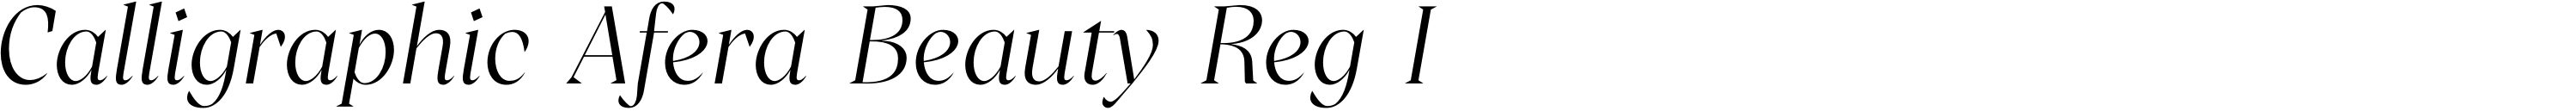 Calligraphic Afera Beauty Reg I